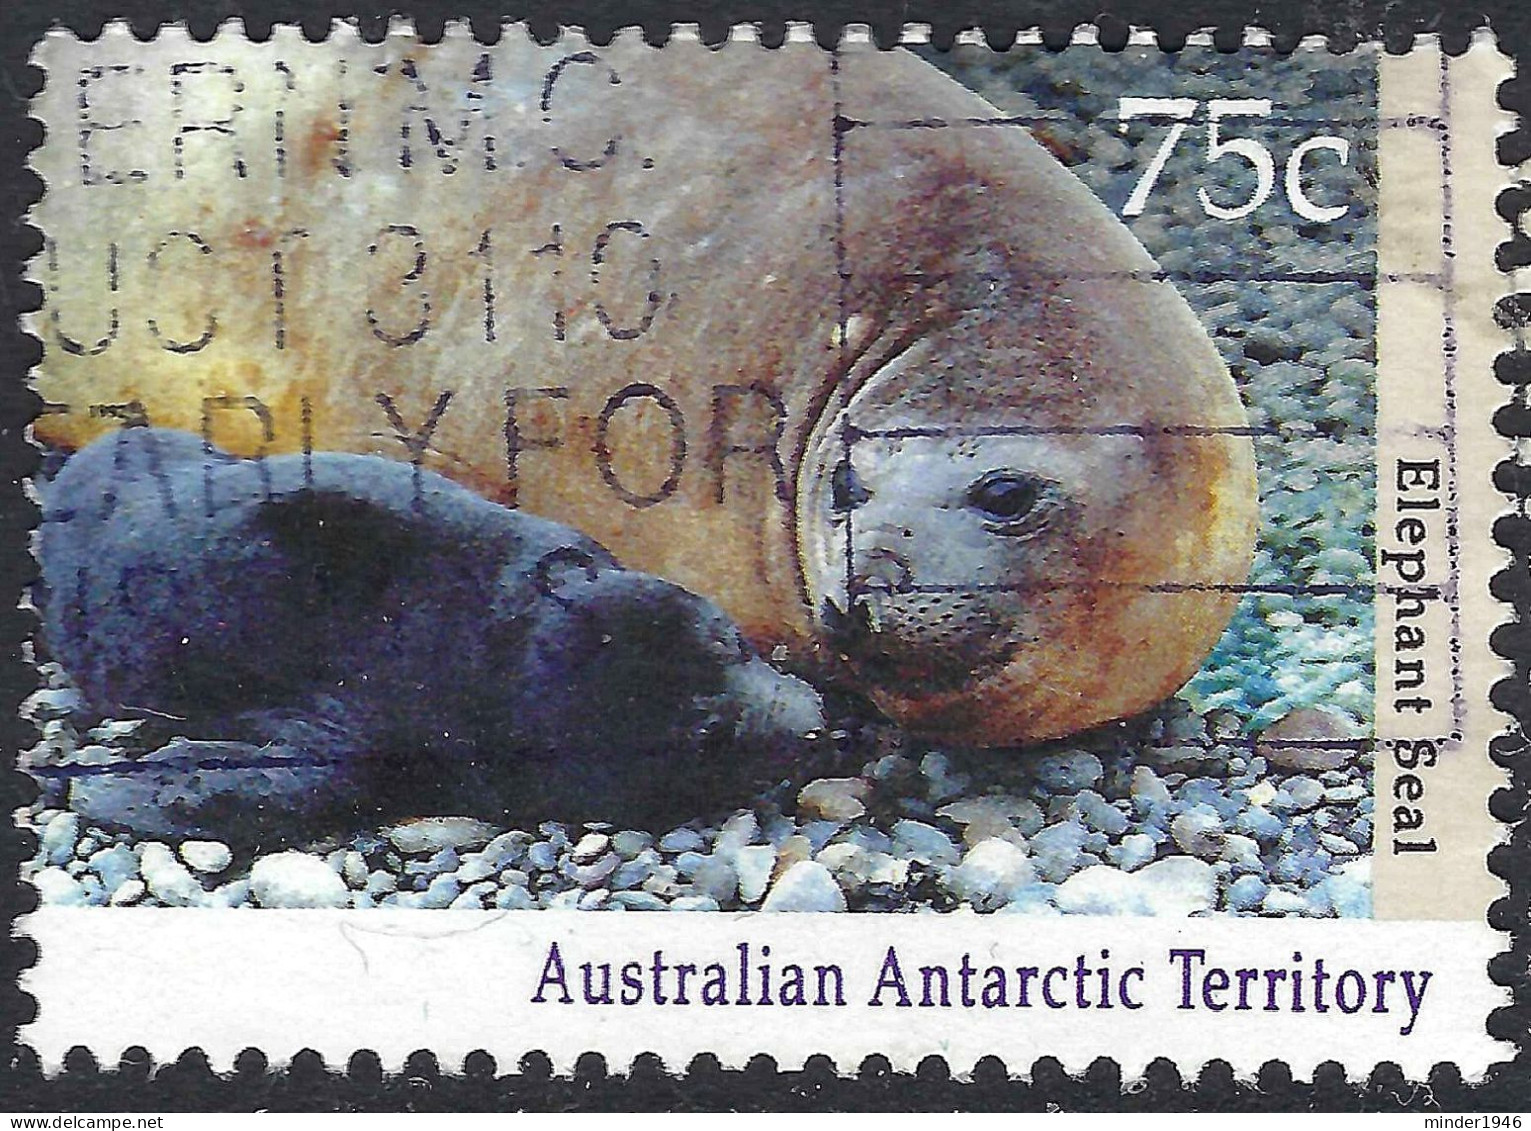 AUSTRALIAN ANTARCTIC TERRITORY (AAT) 1992 QEII 75c Multicoloured, Wildlife-Elephant Seal SG91 FU - Used Stamps